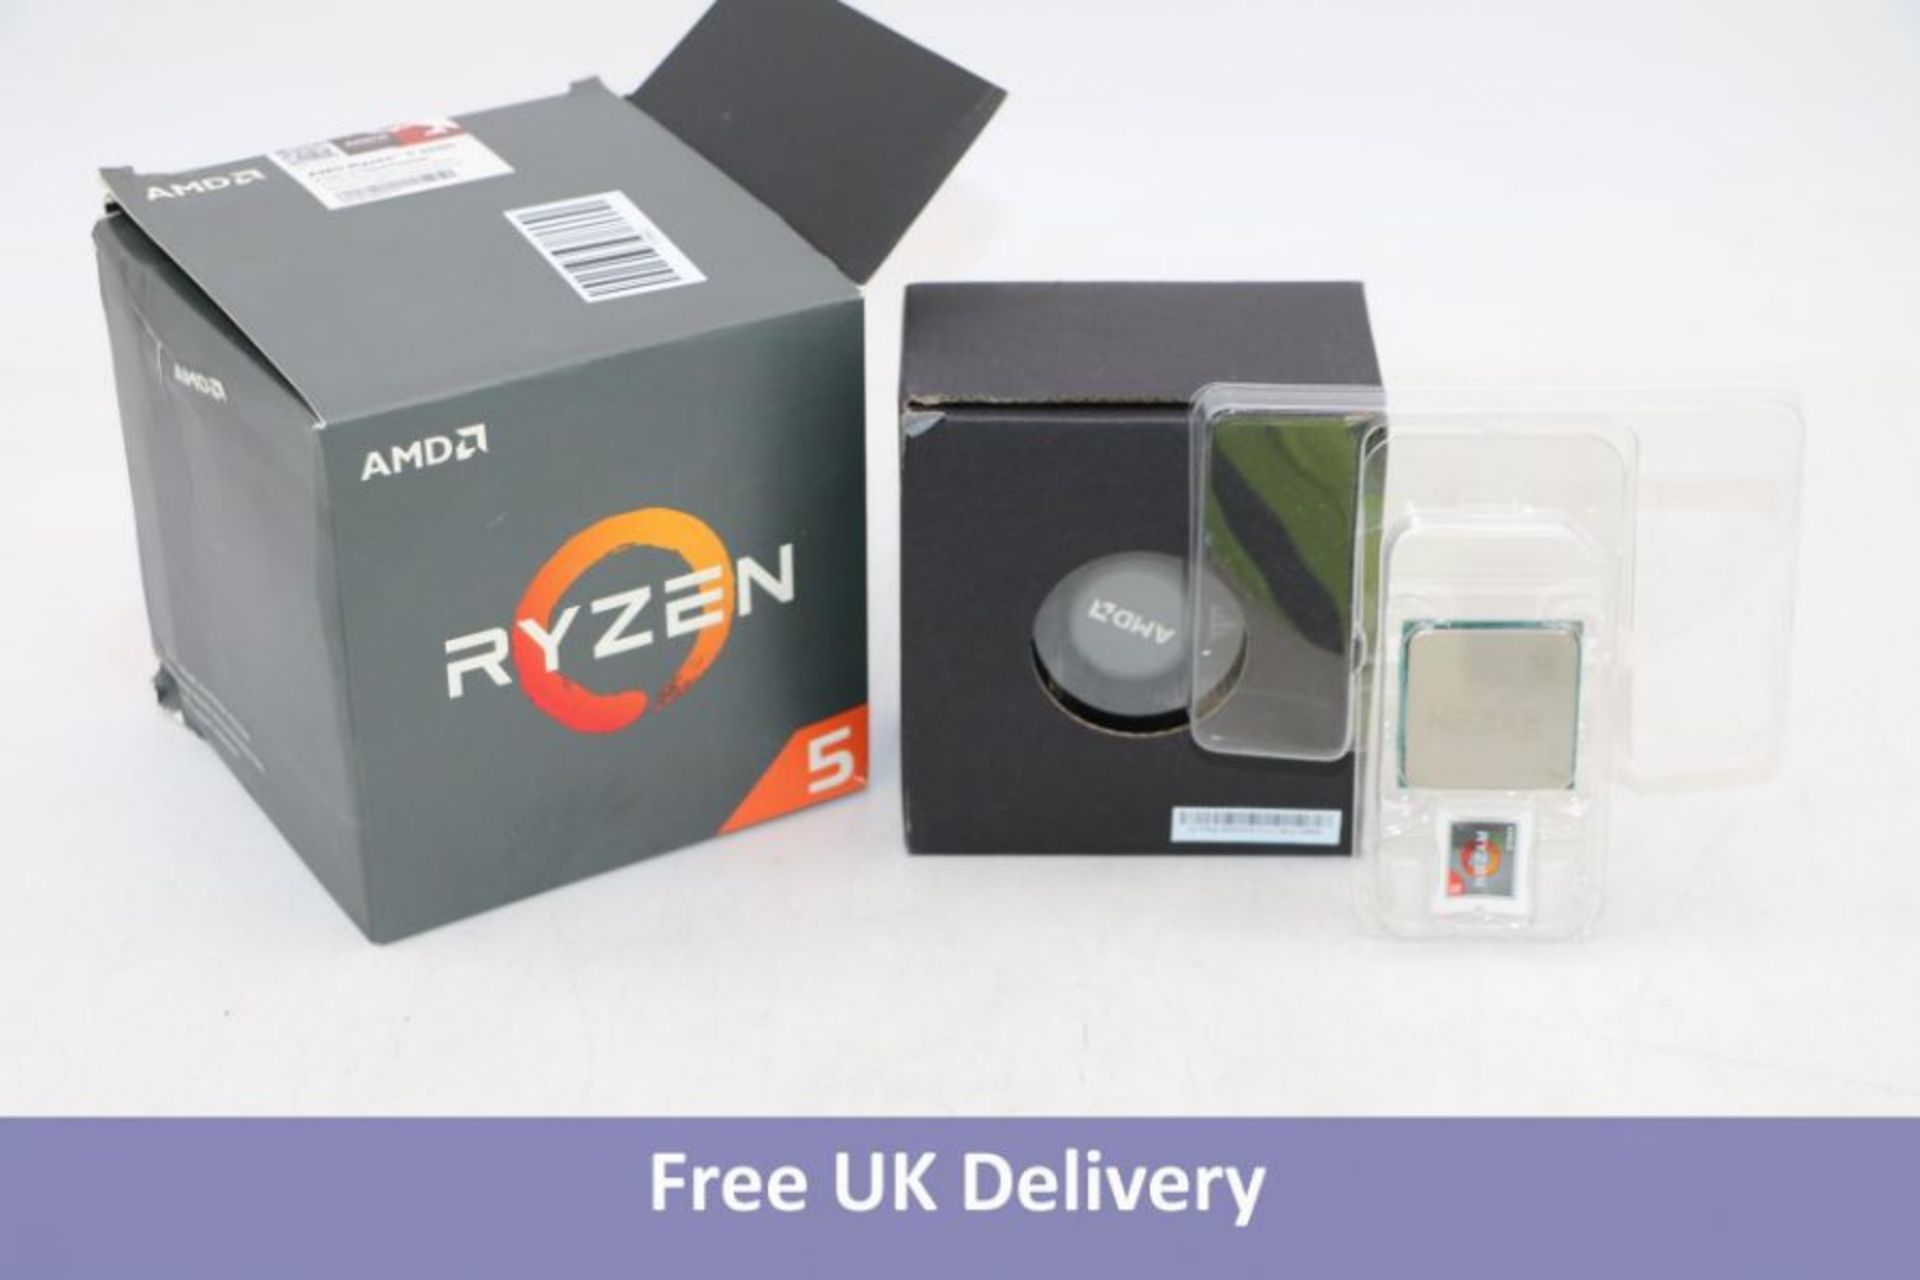 AMD Ryzen 5 2600 AM4 Processor. Boxed as new, box opened